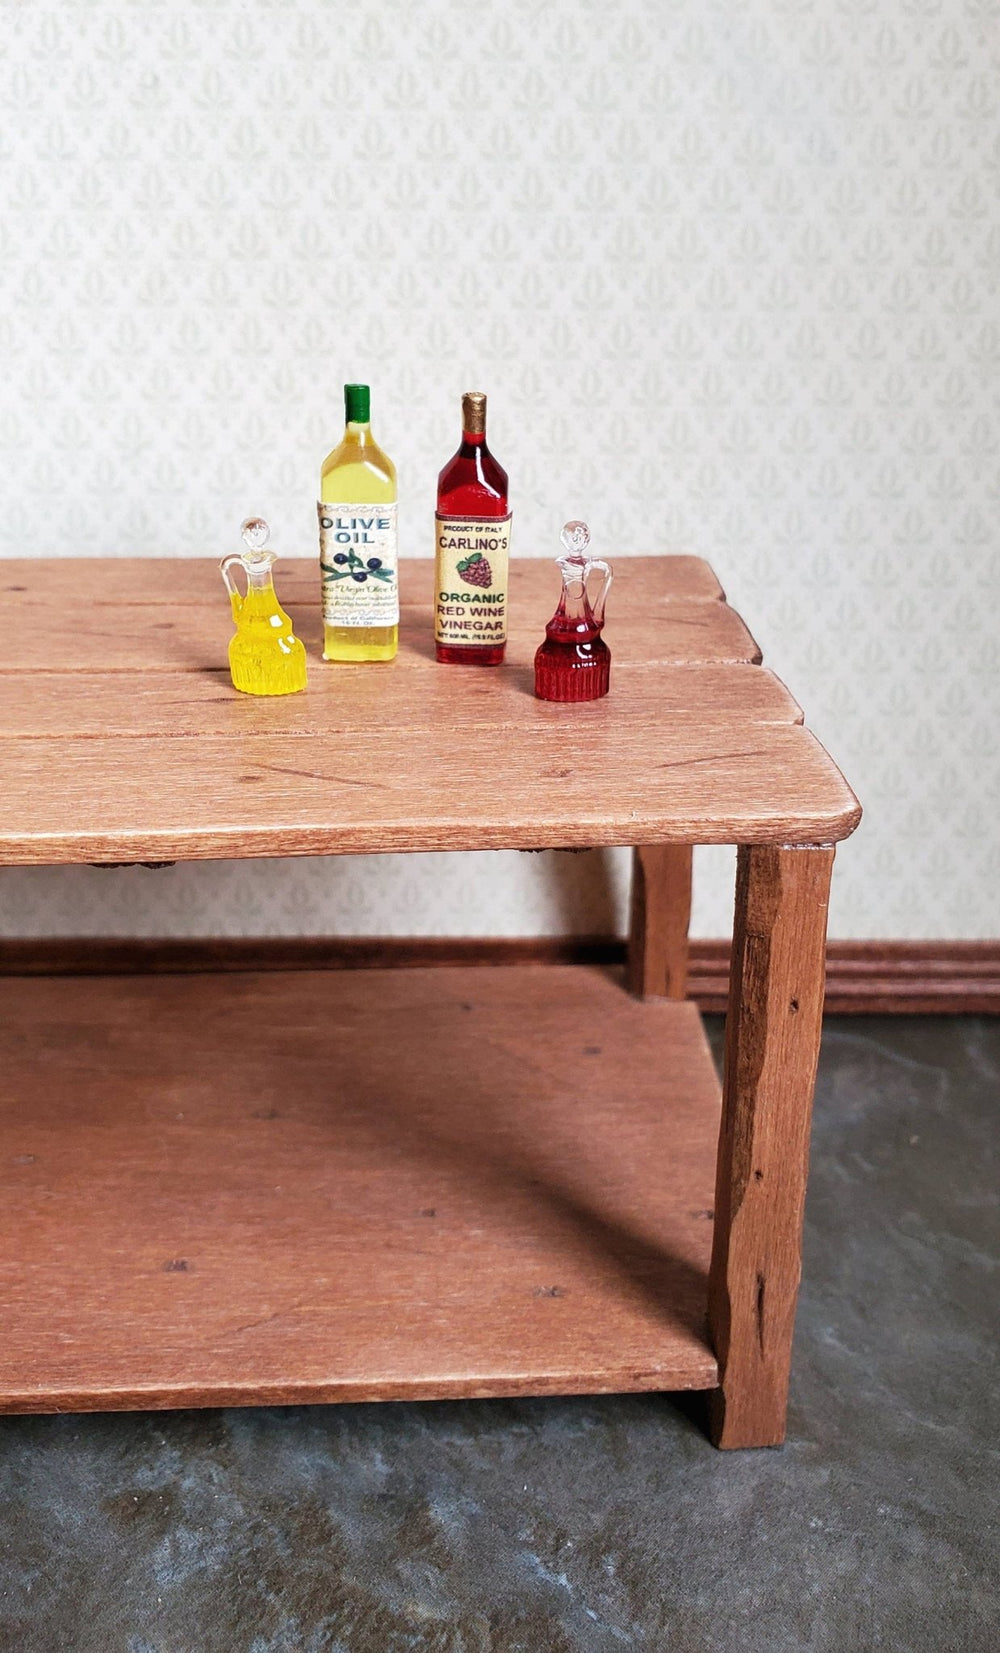 Dollhouse Miniature Oil & Vinegar Cruet Set with Bottles 1:12 Scale Kitchen Accessory - Miniature Crush